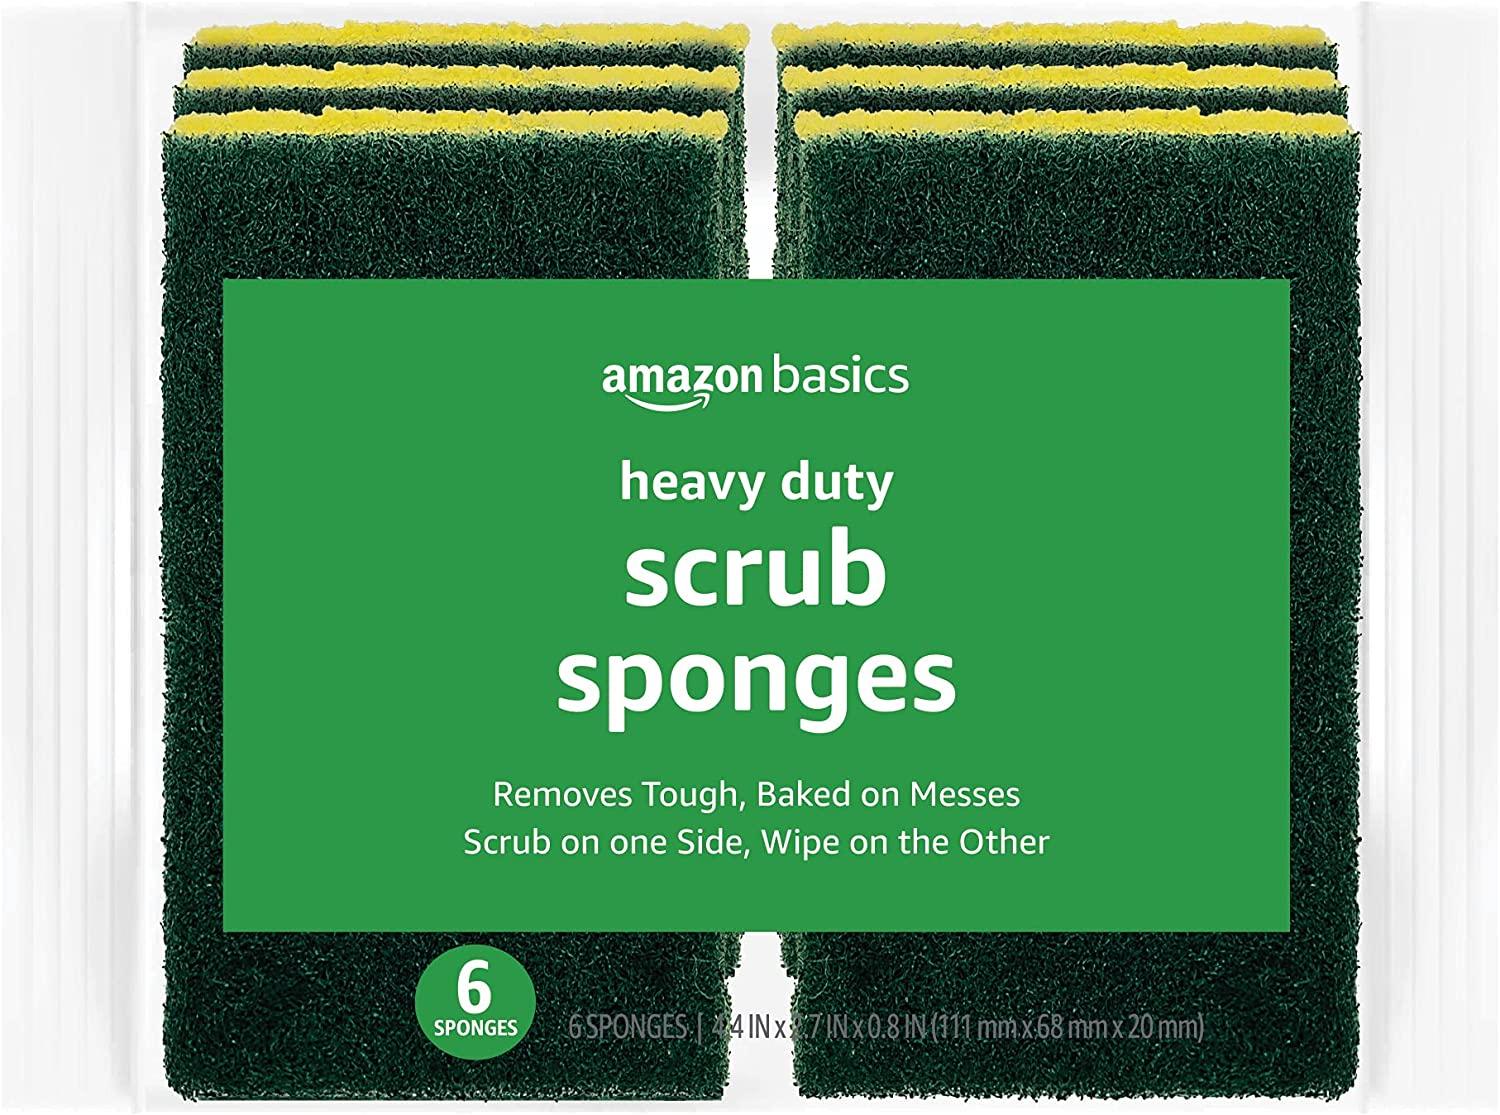 Amazon Basics Sponges 6 Pack for $3.58 Shipped